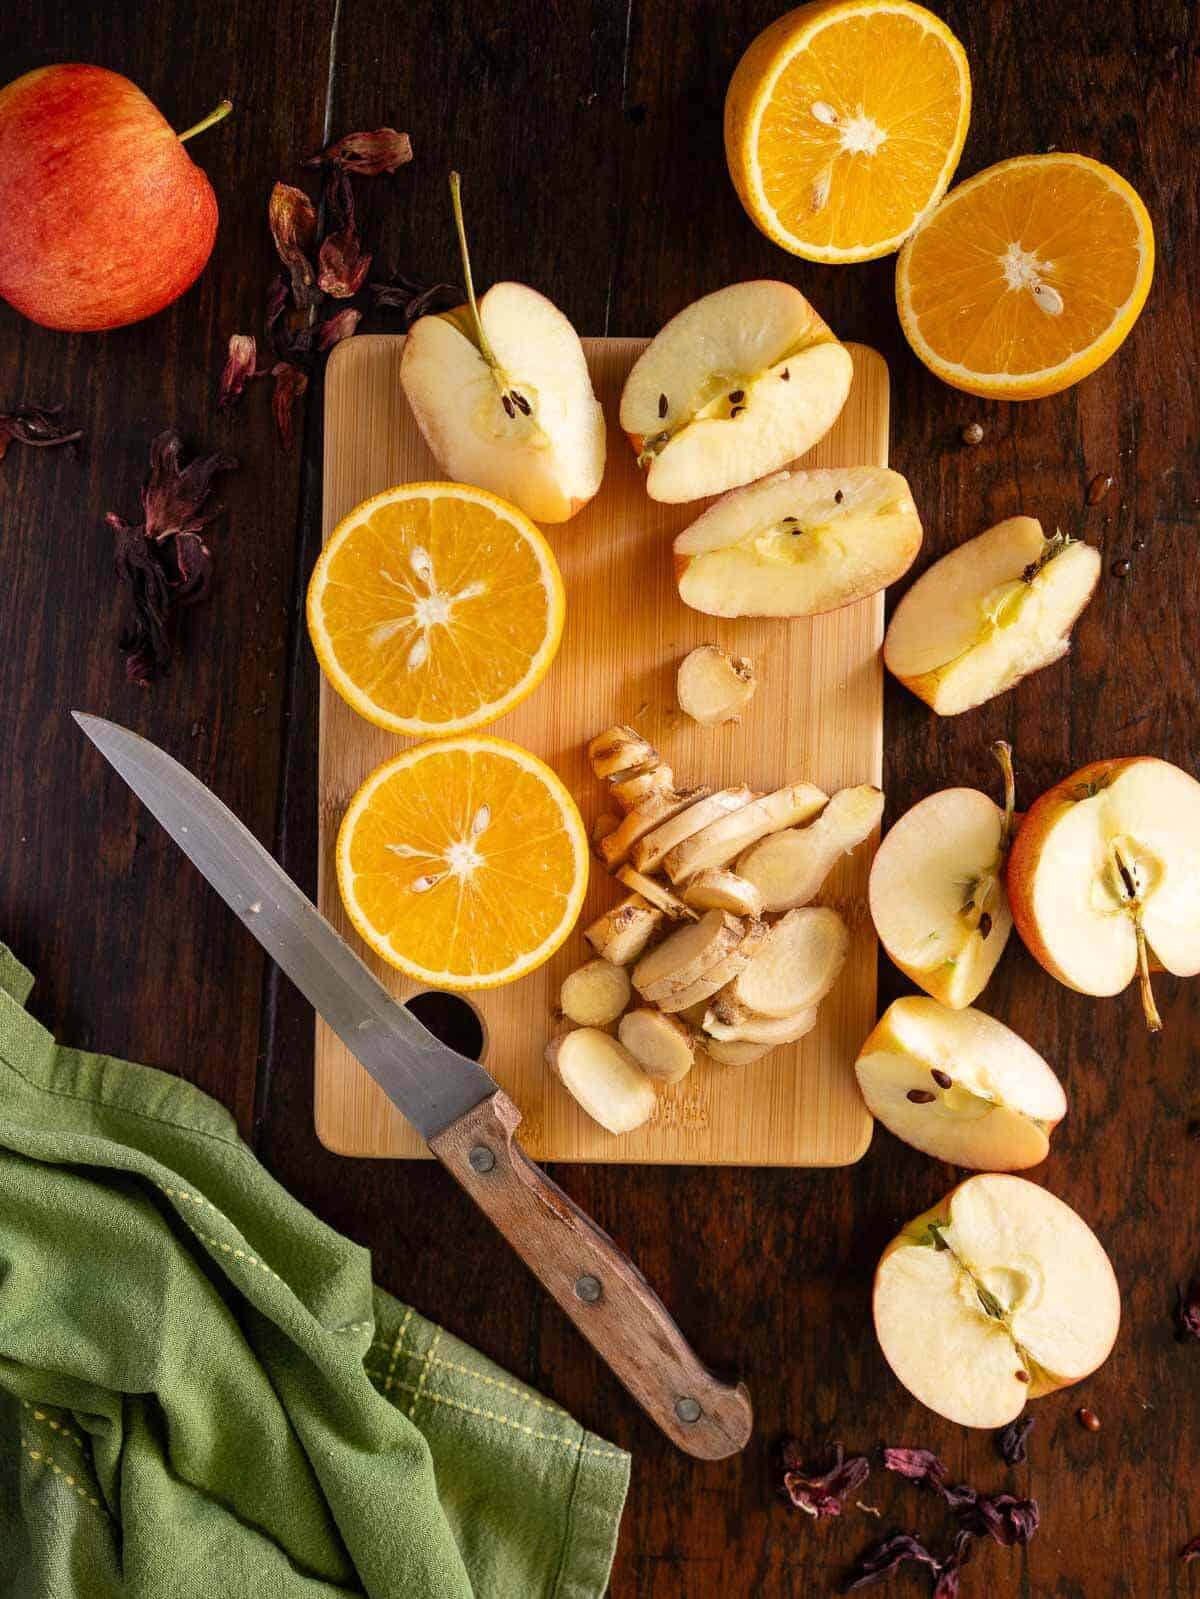 halved oranges, quartered apples, and sliced fresh ginger on a wooden table.